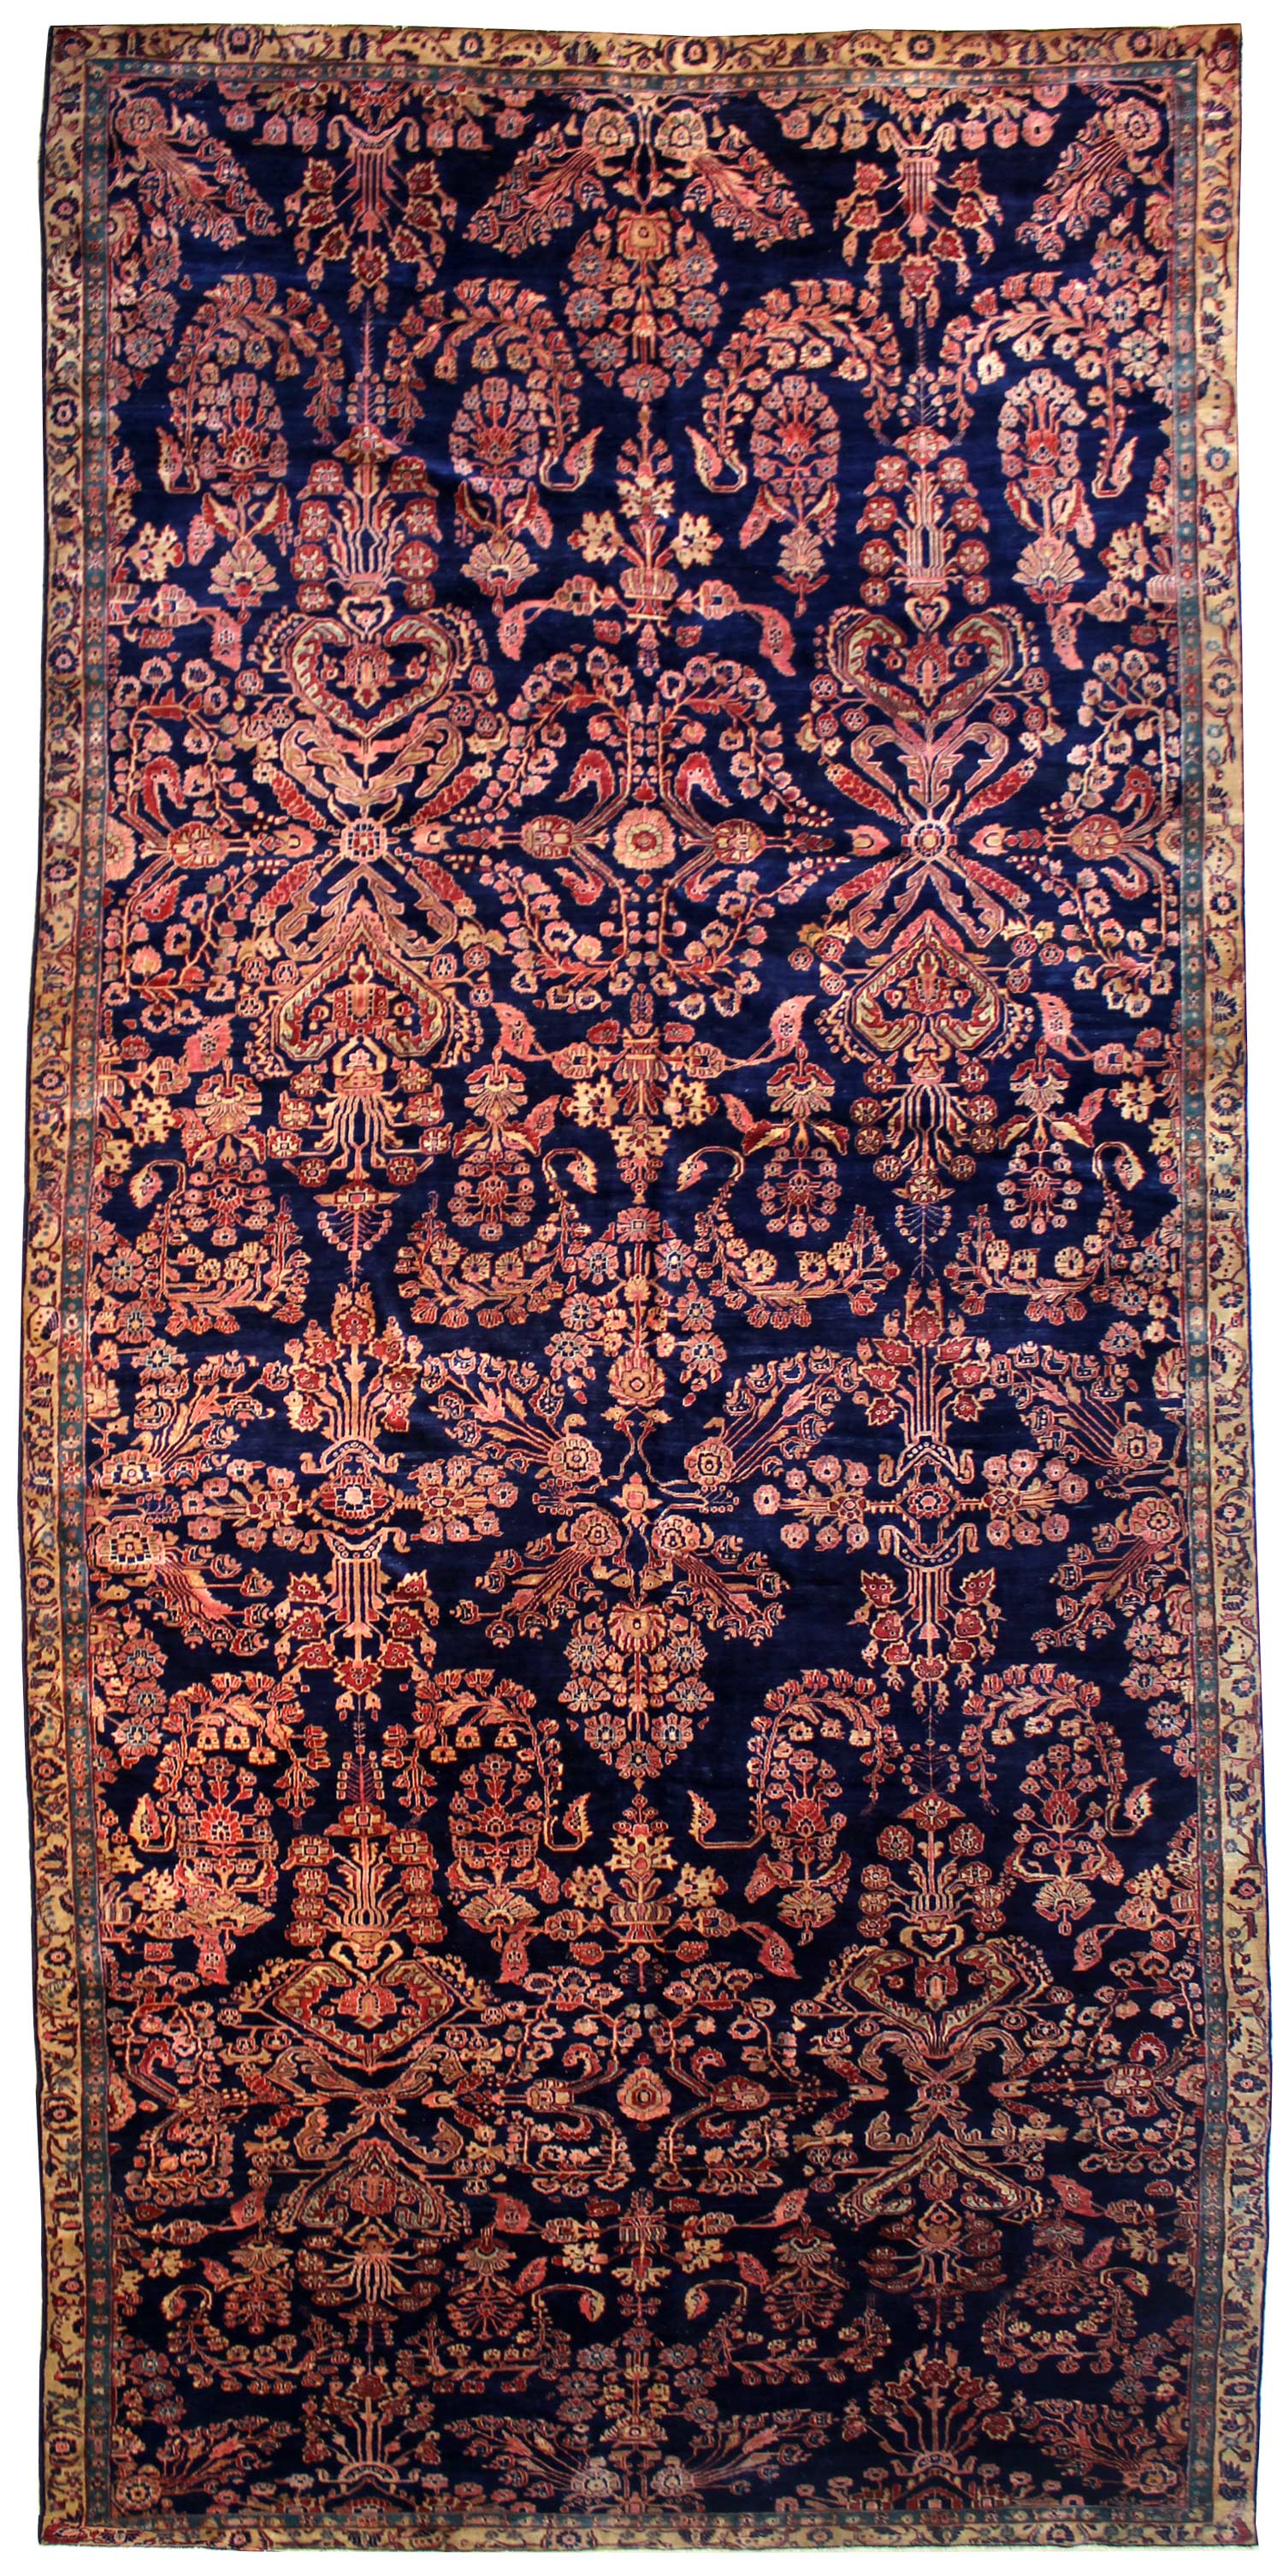 Antique Mahajaran Sarouk Handwoven Traditional Rug